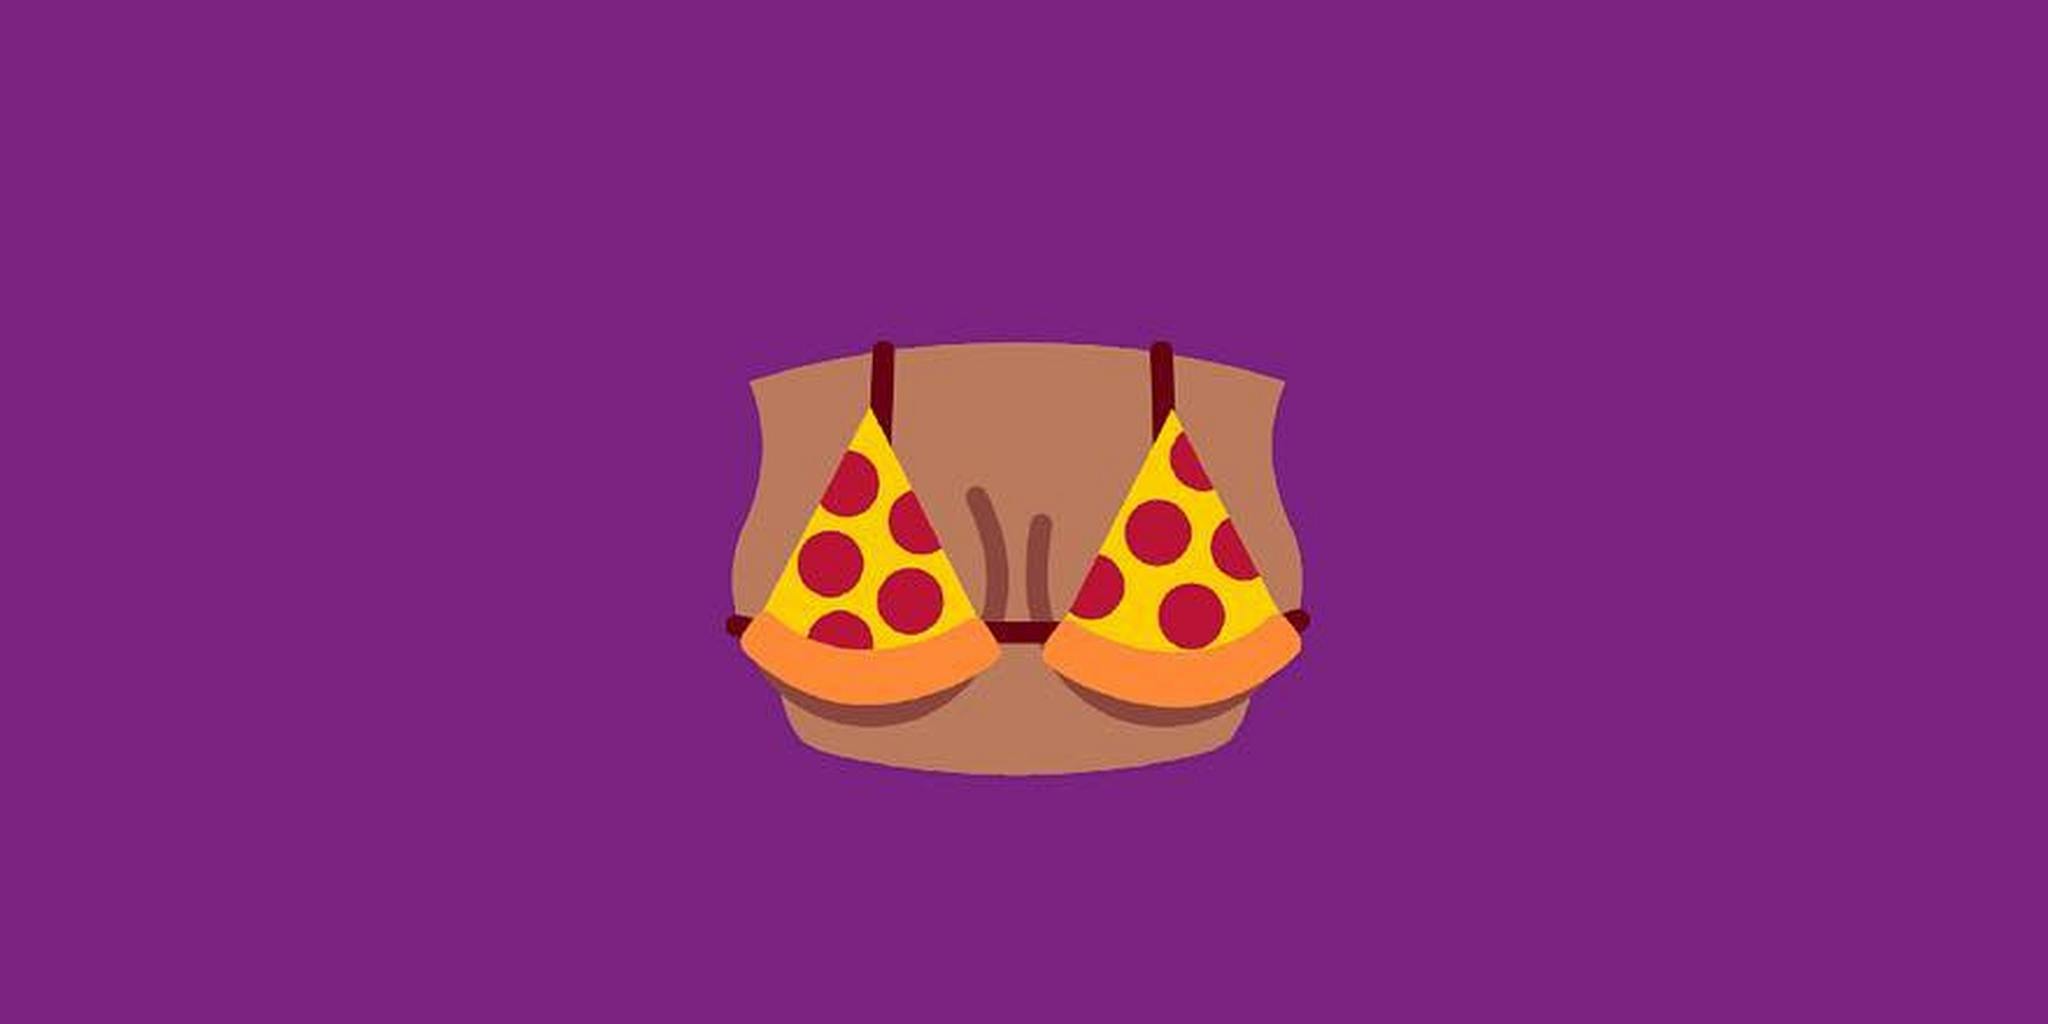 We spoke with a Flirtmoji artist about sex-themed emojis